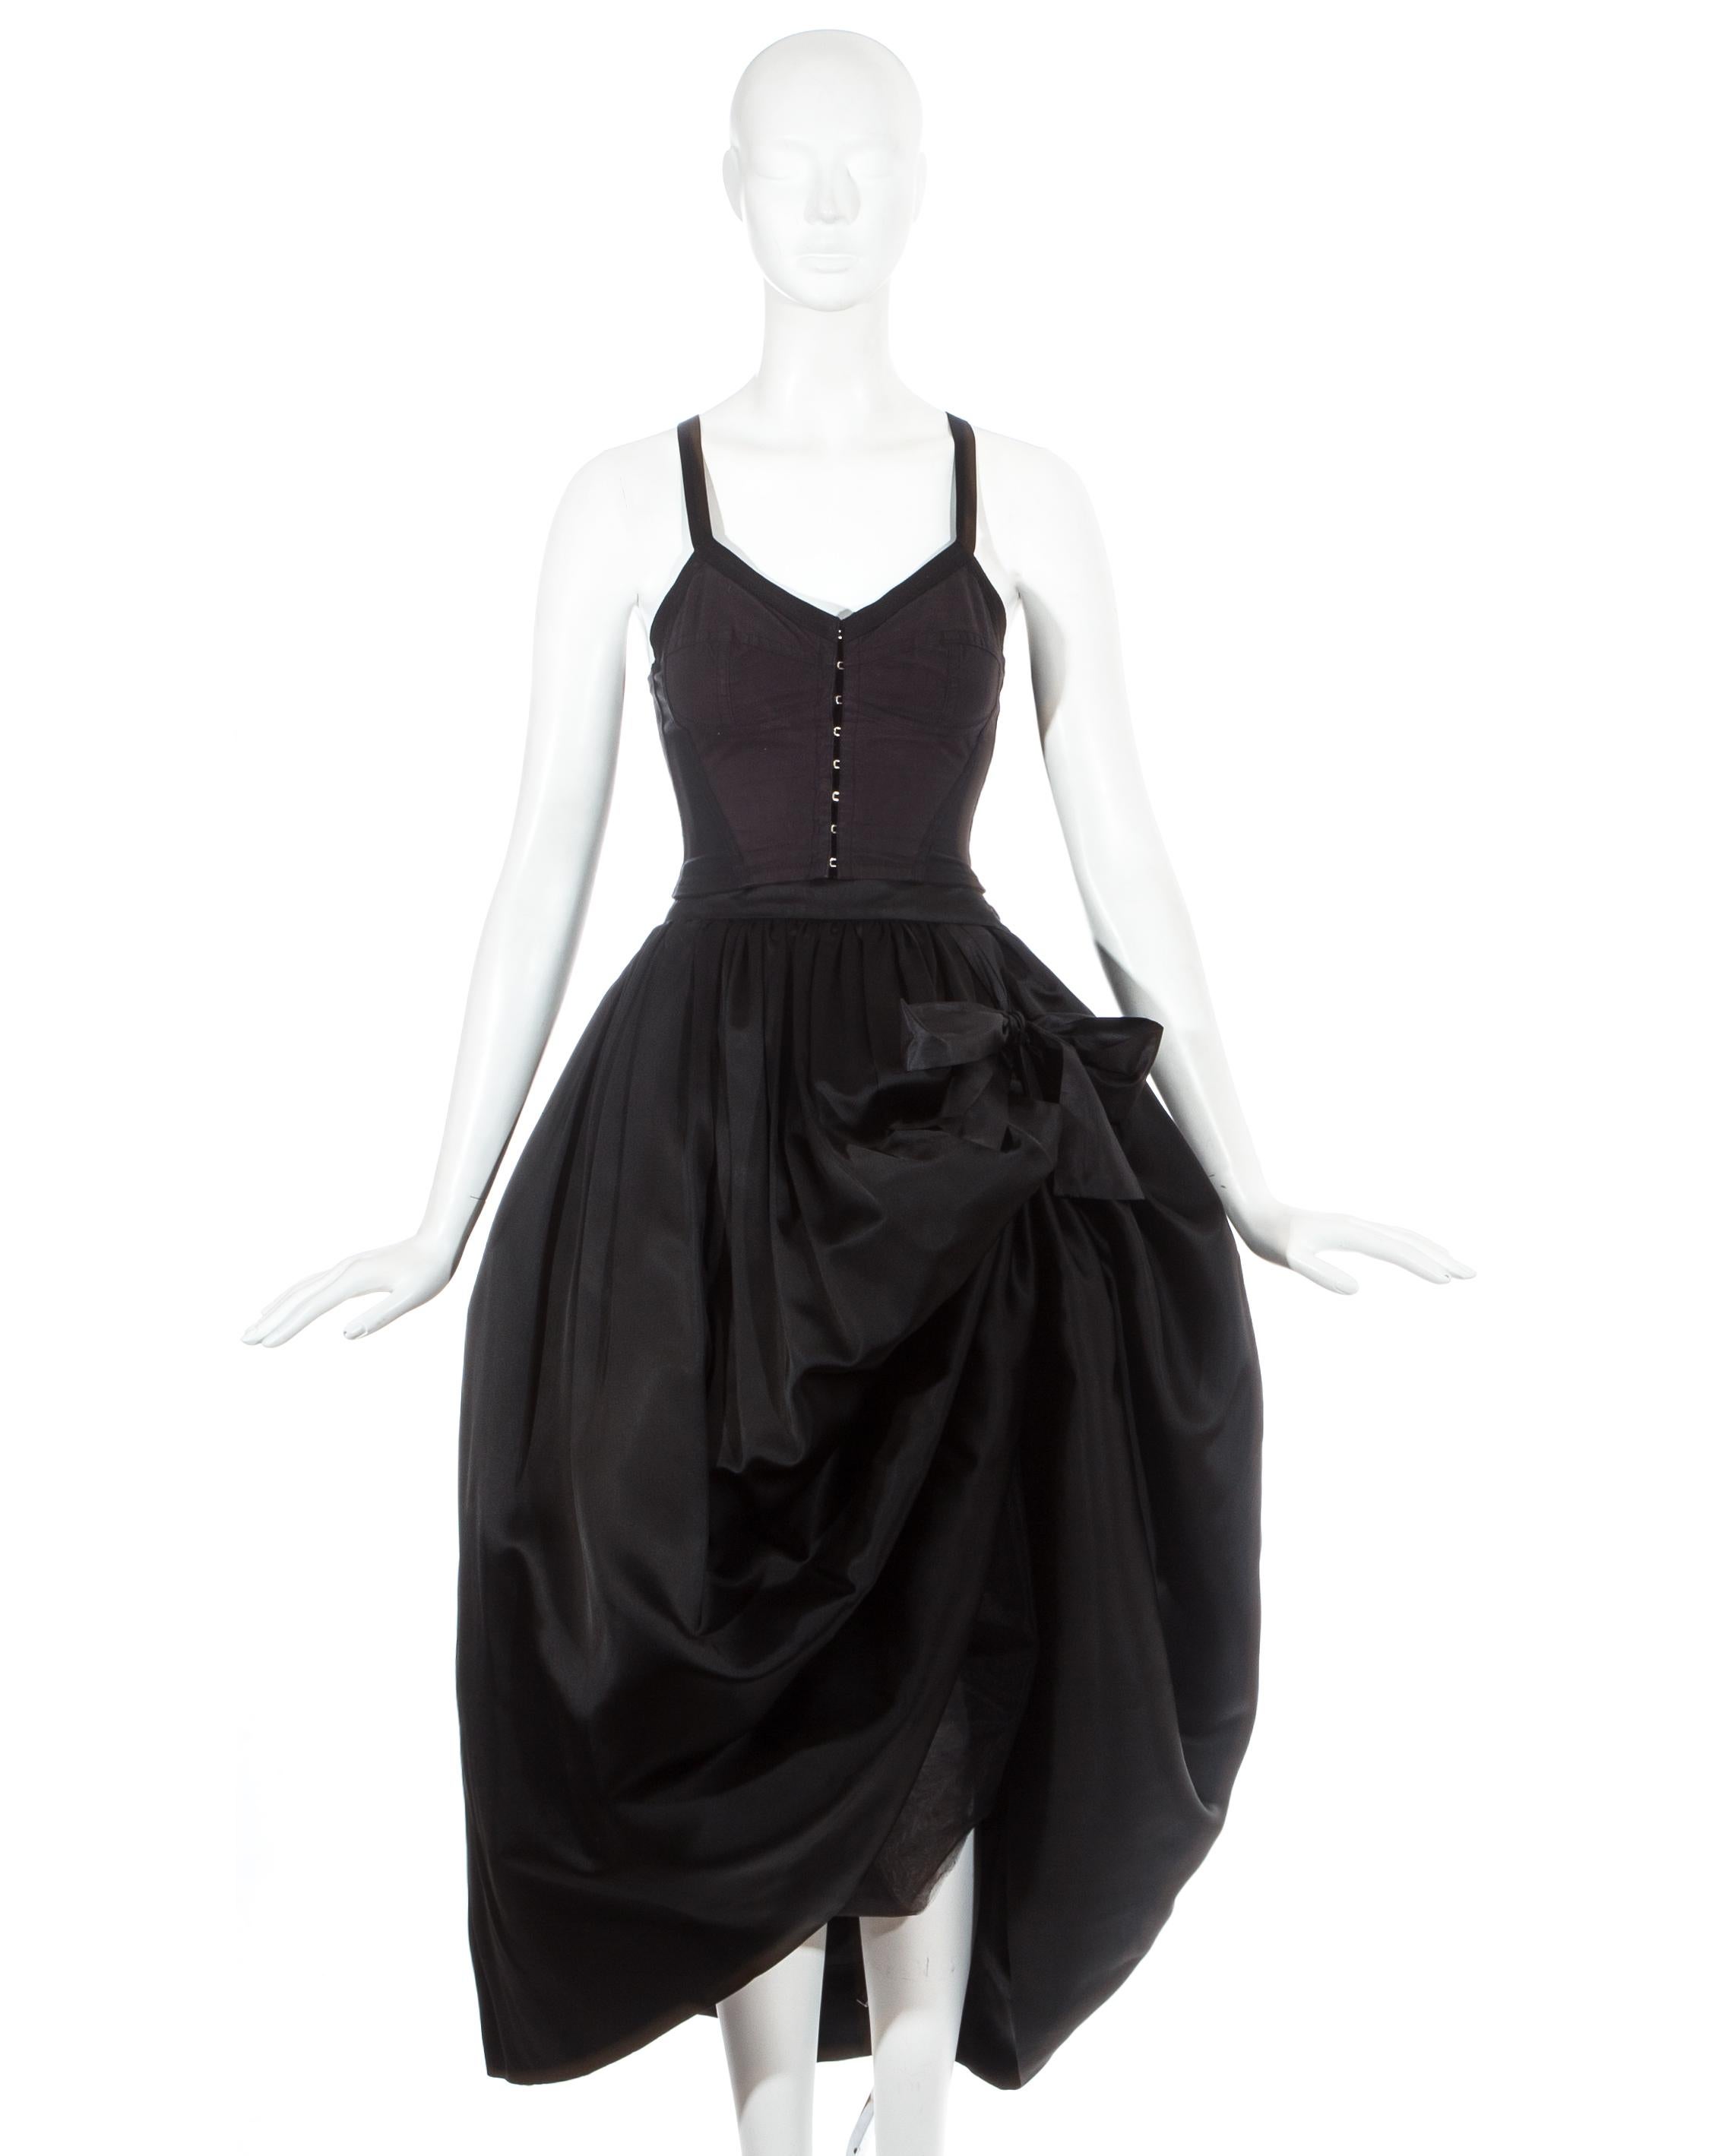 Dolce & Gabbana black silk corset and bustle skirt ensemble

Fall-Winter 1992 